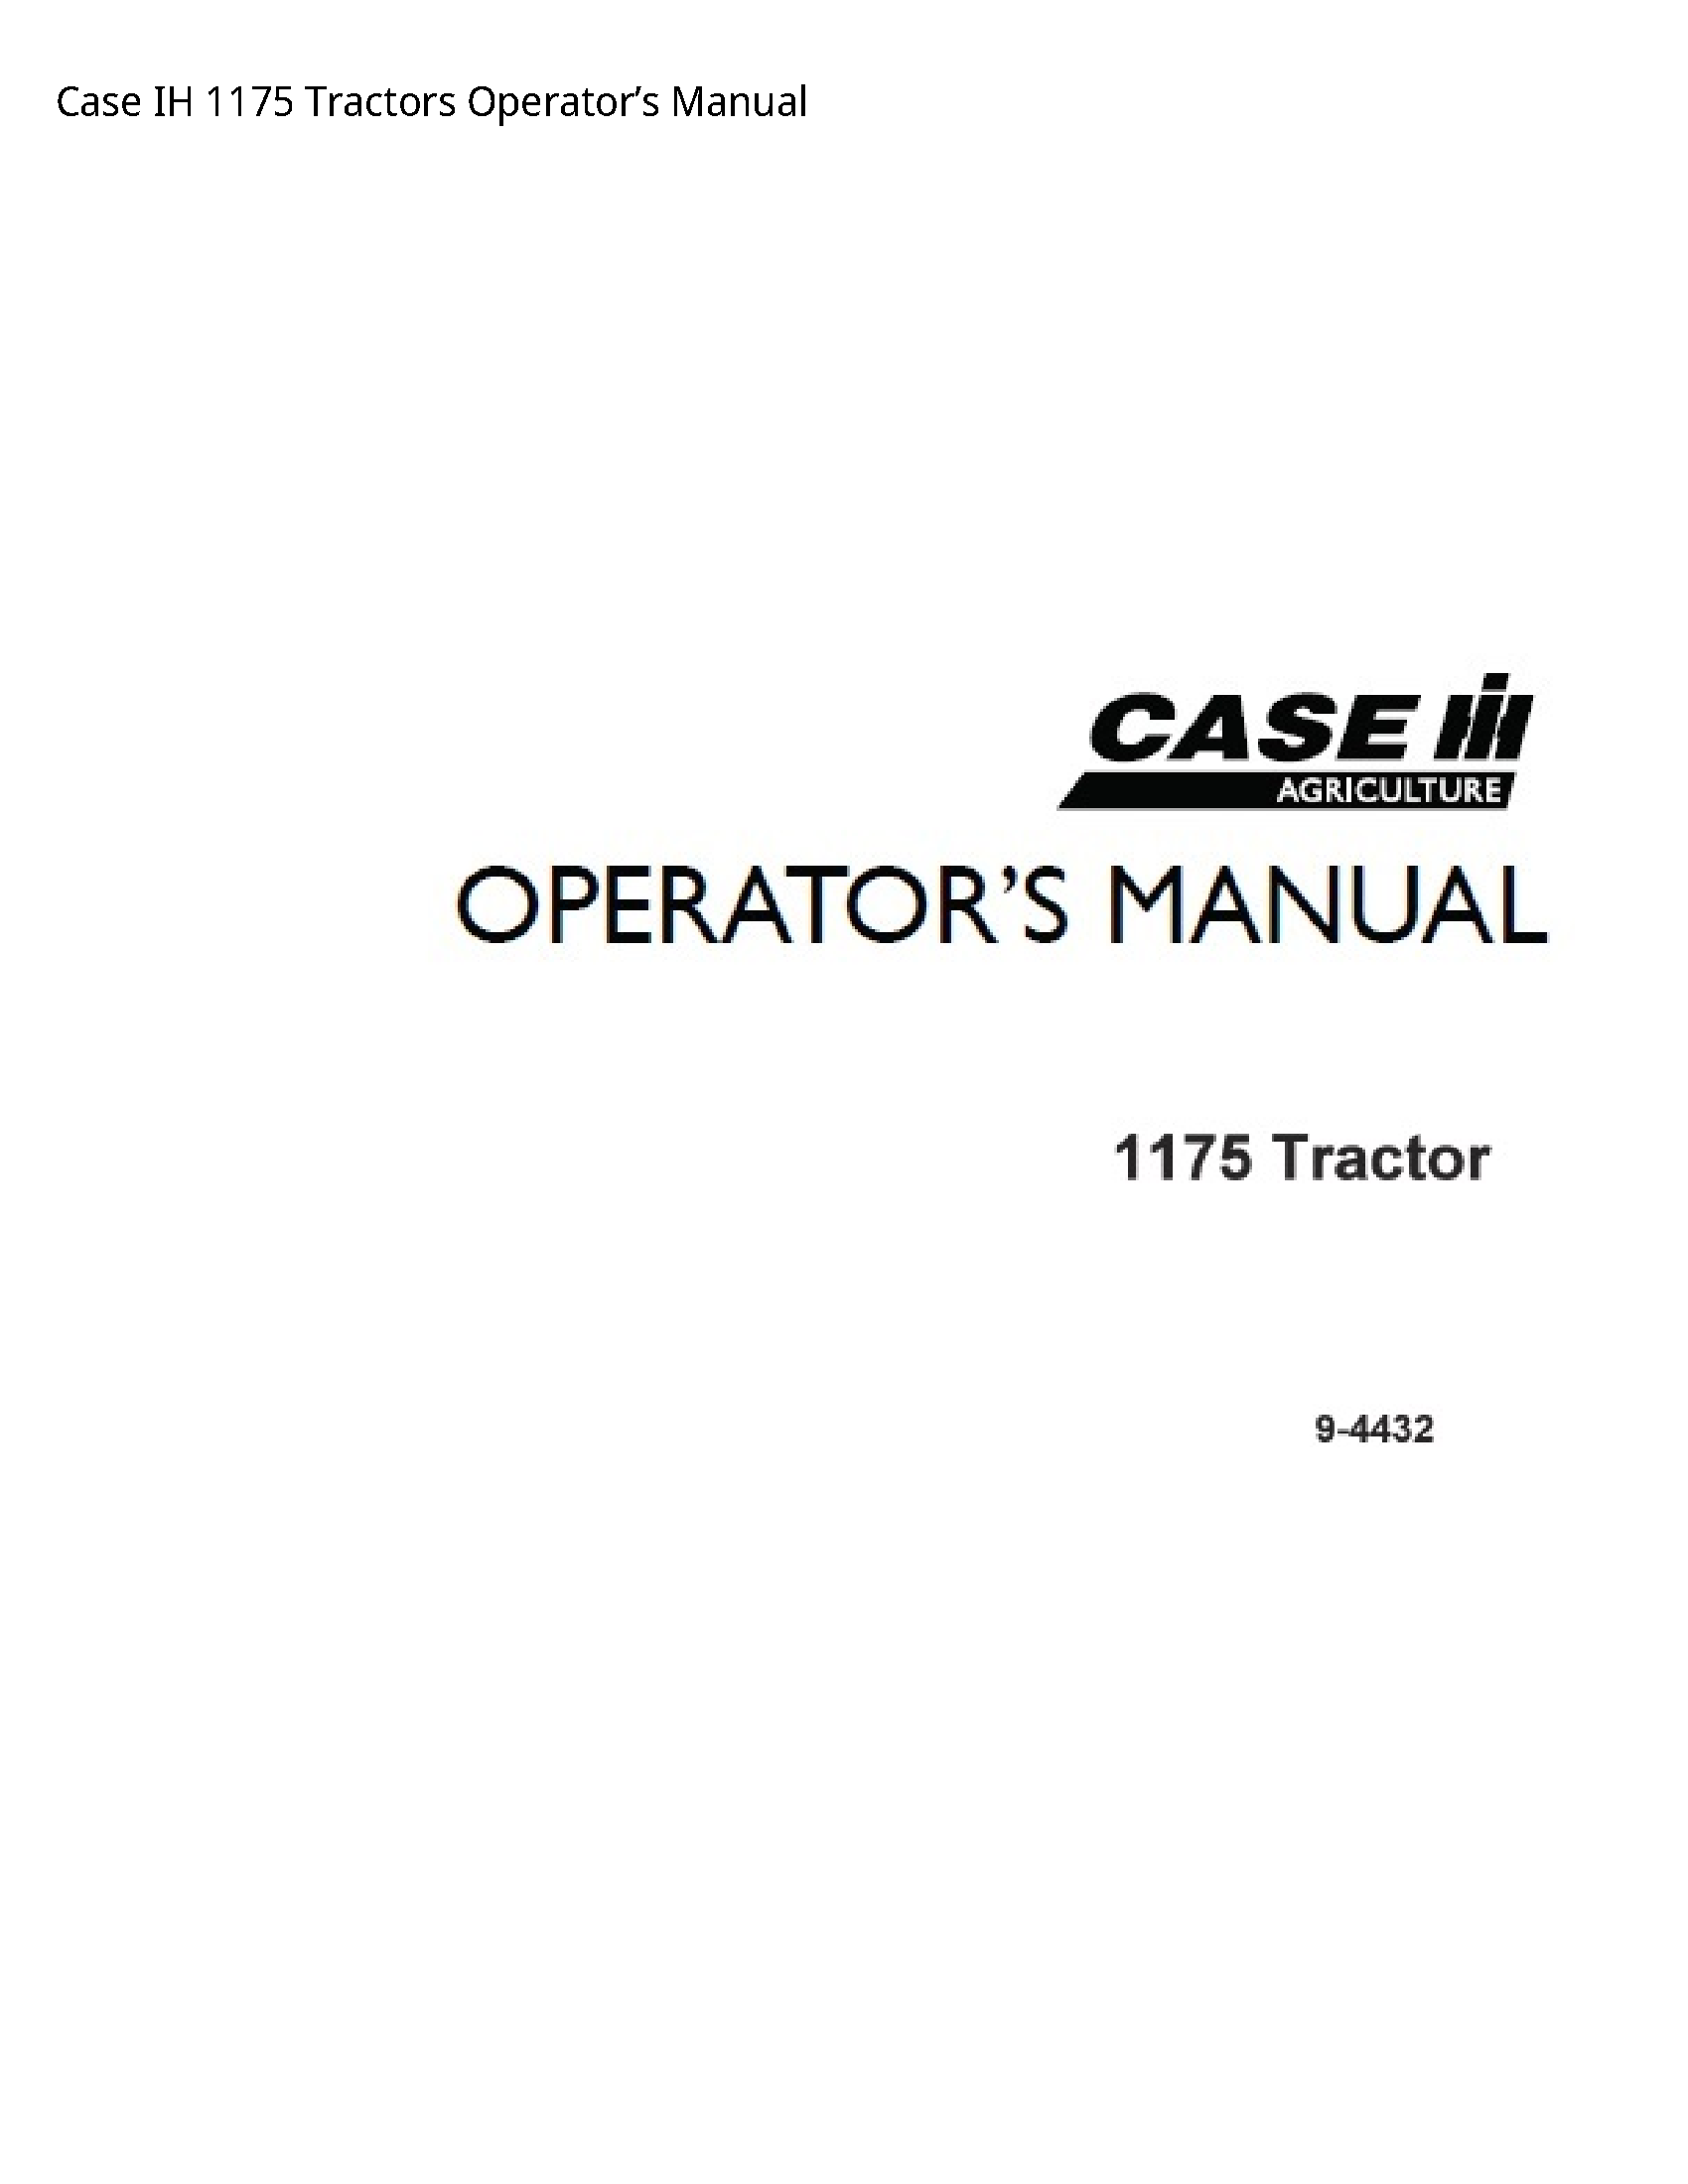 Case/Case IH 1175 IH Tractors Operator’s manual